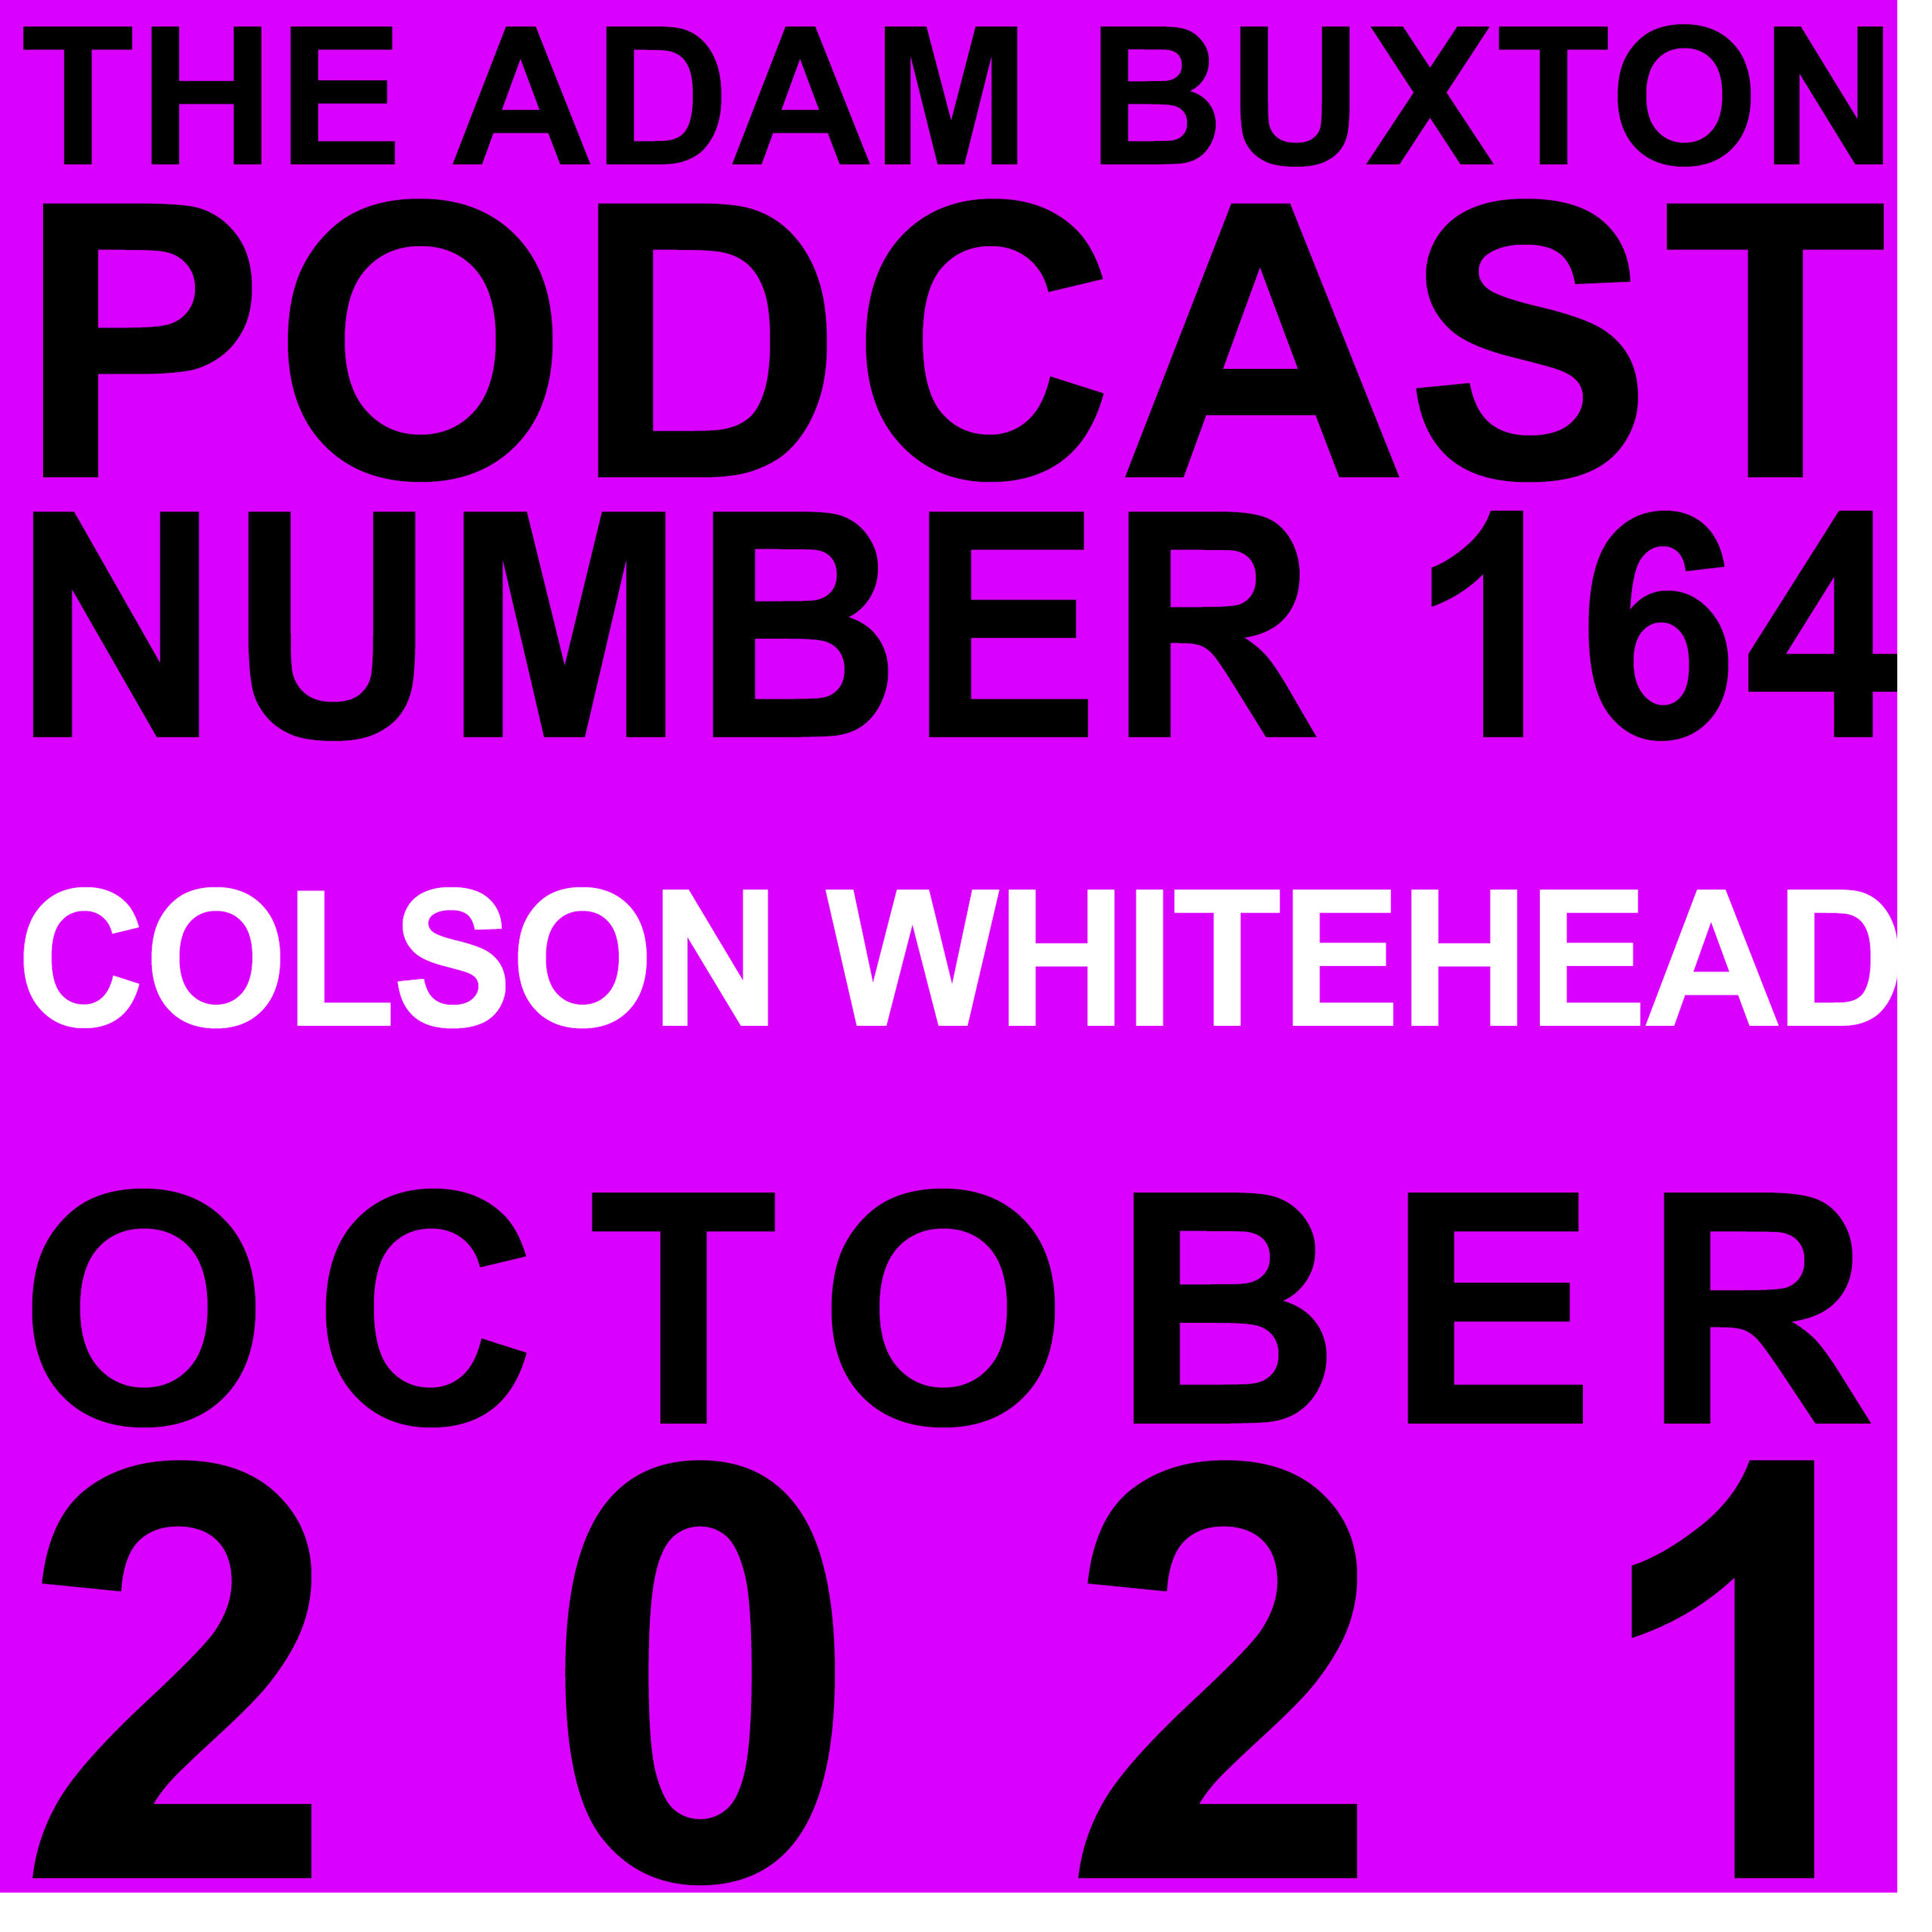 EP.164 - COLSON WHITEHEAD